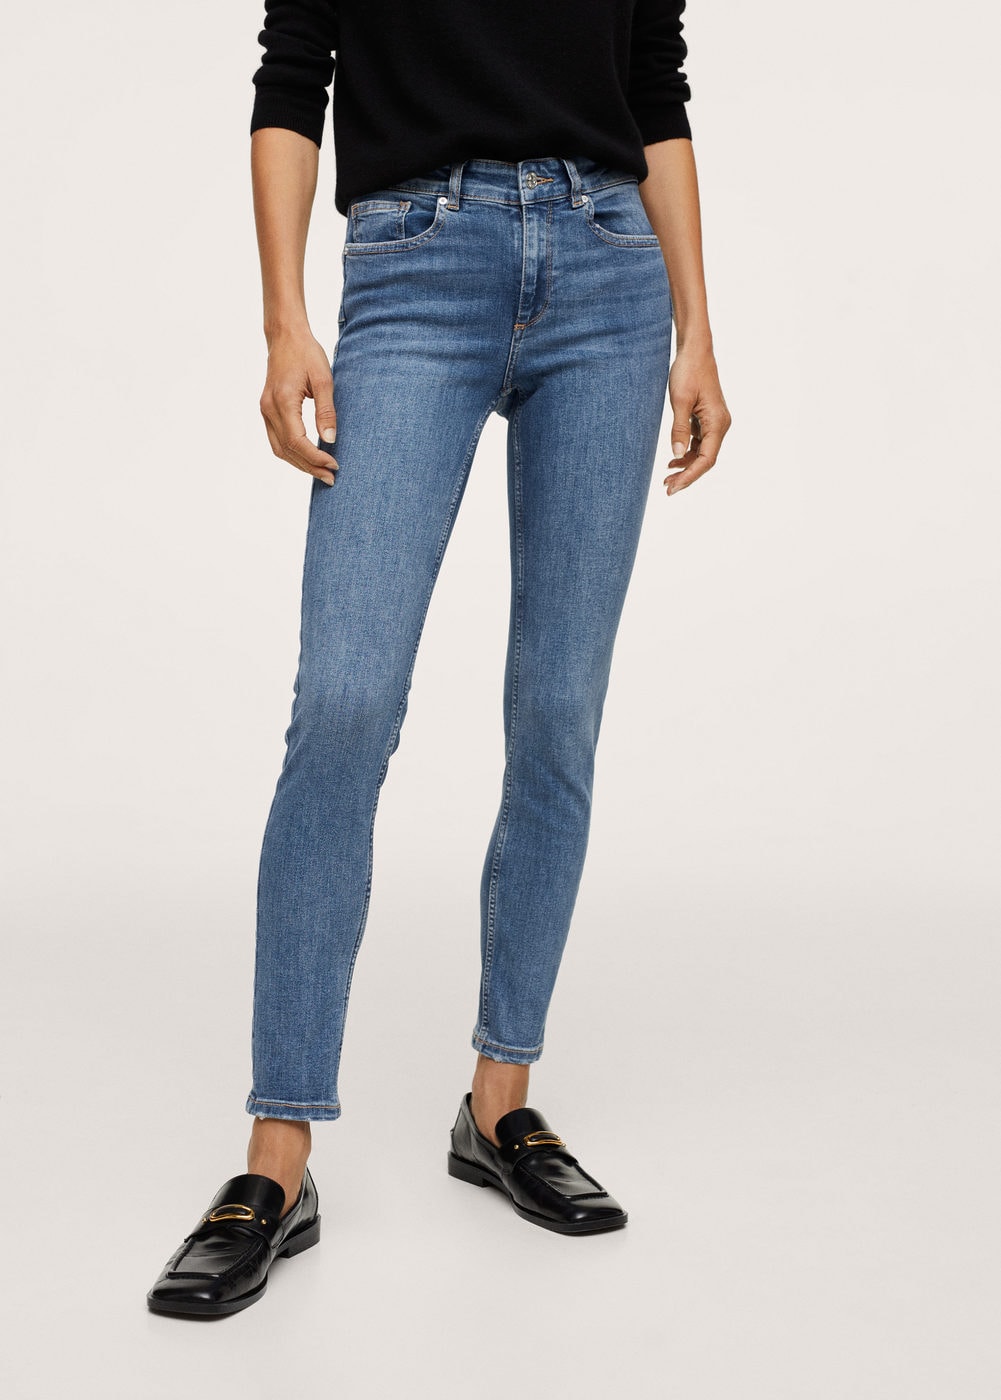 Mango Skinny Push-Up Jeans